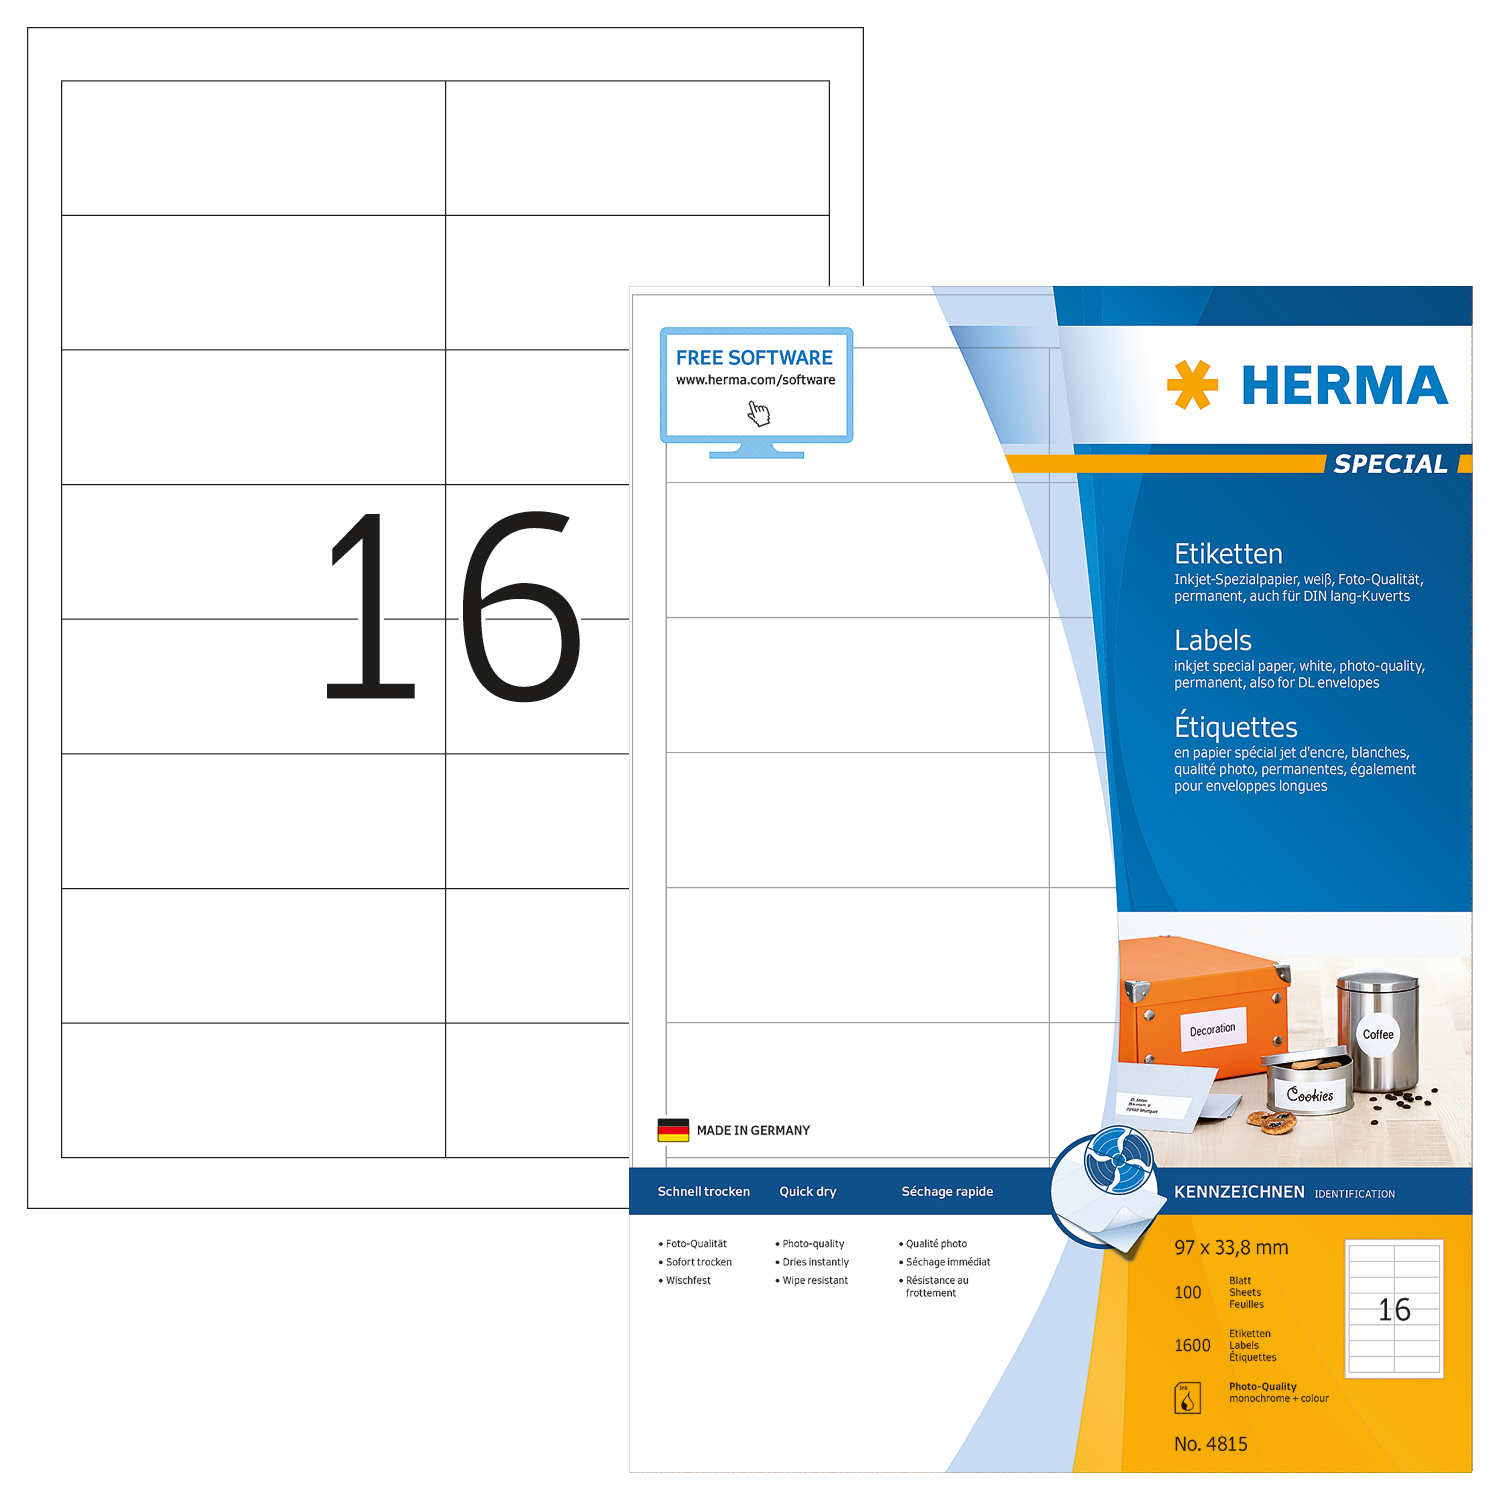 HERMA Etiquettes Special 97×33,8mm 4815 blanc 1600 pcs.